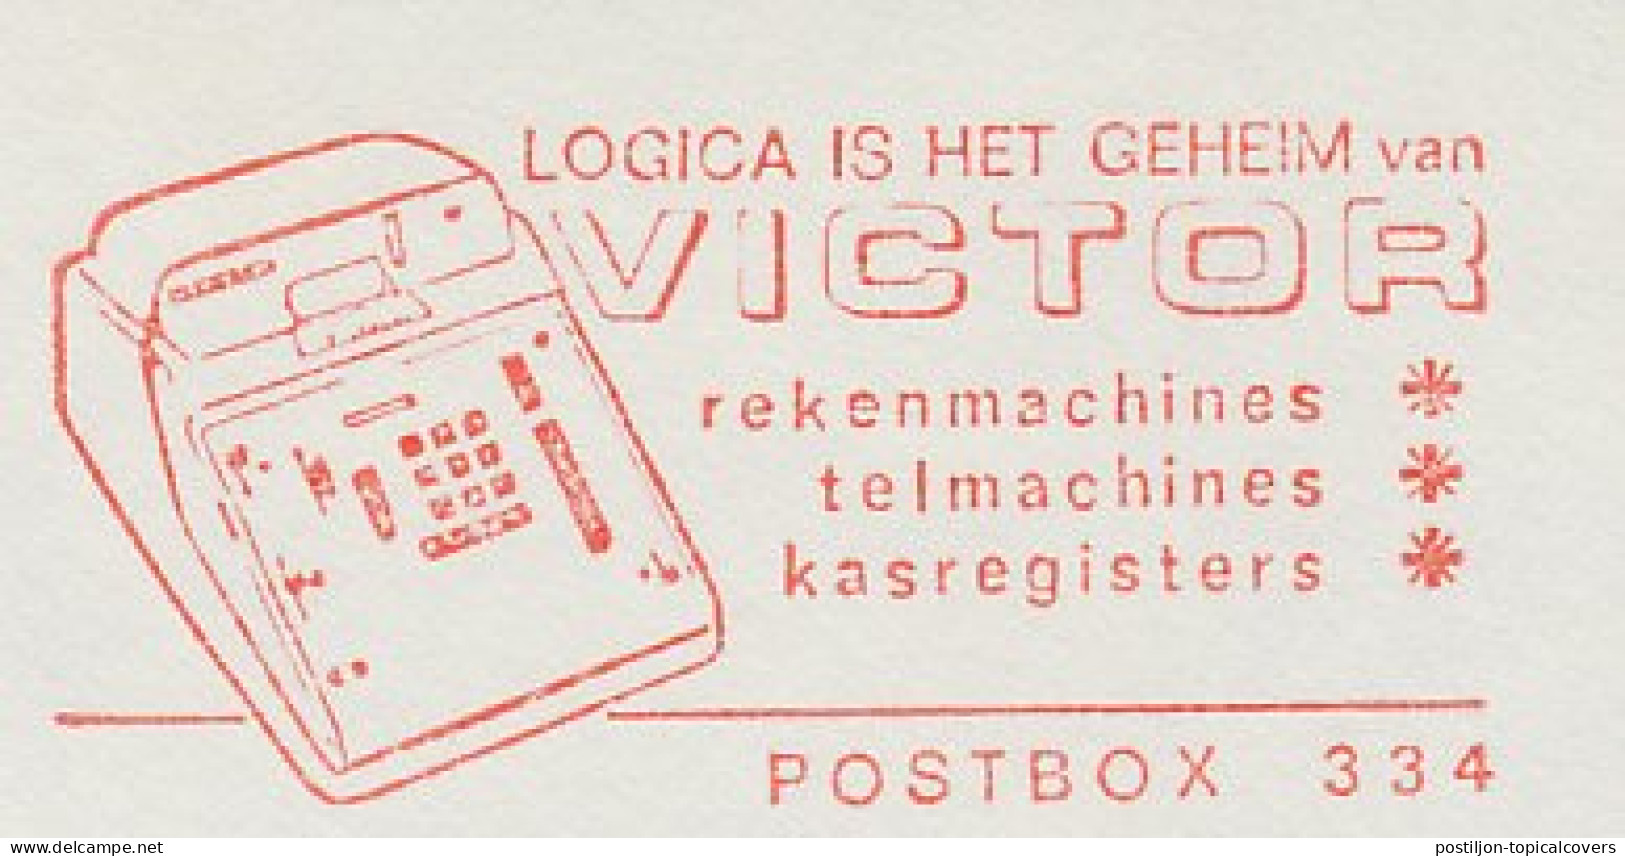 Meter Cut Netherlands 1965 Calculator - Counting Machine - Cash Register - Ohne Zuordnung